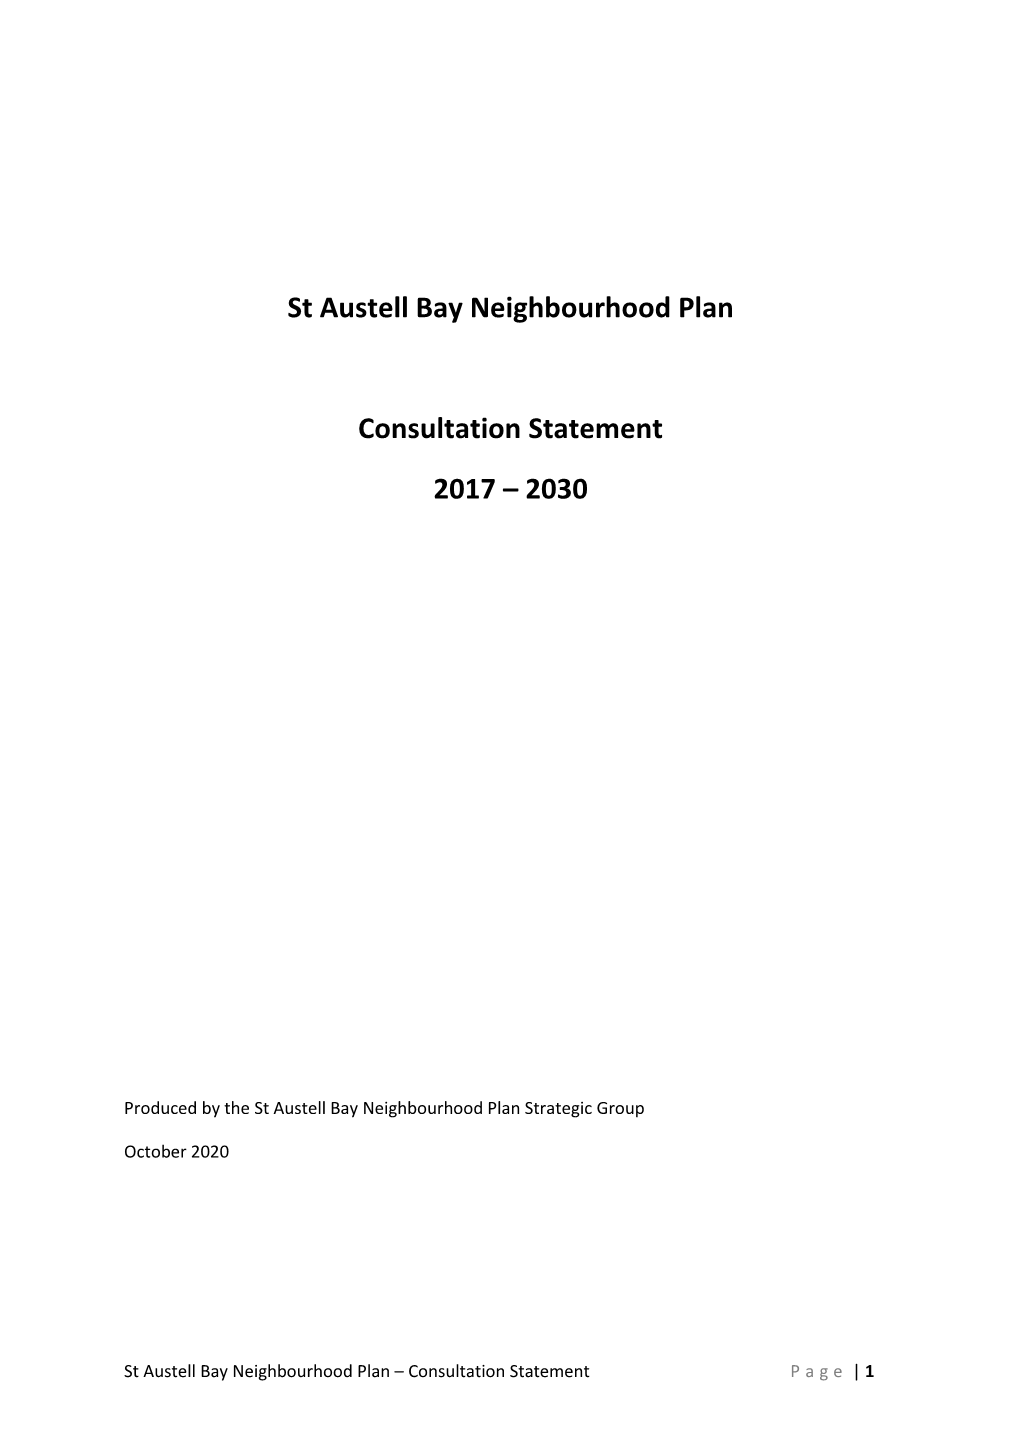 St Austell Bay NDP Consultation Statement